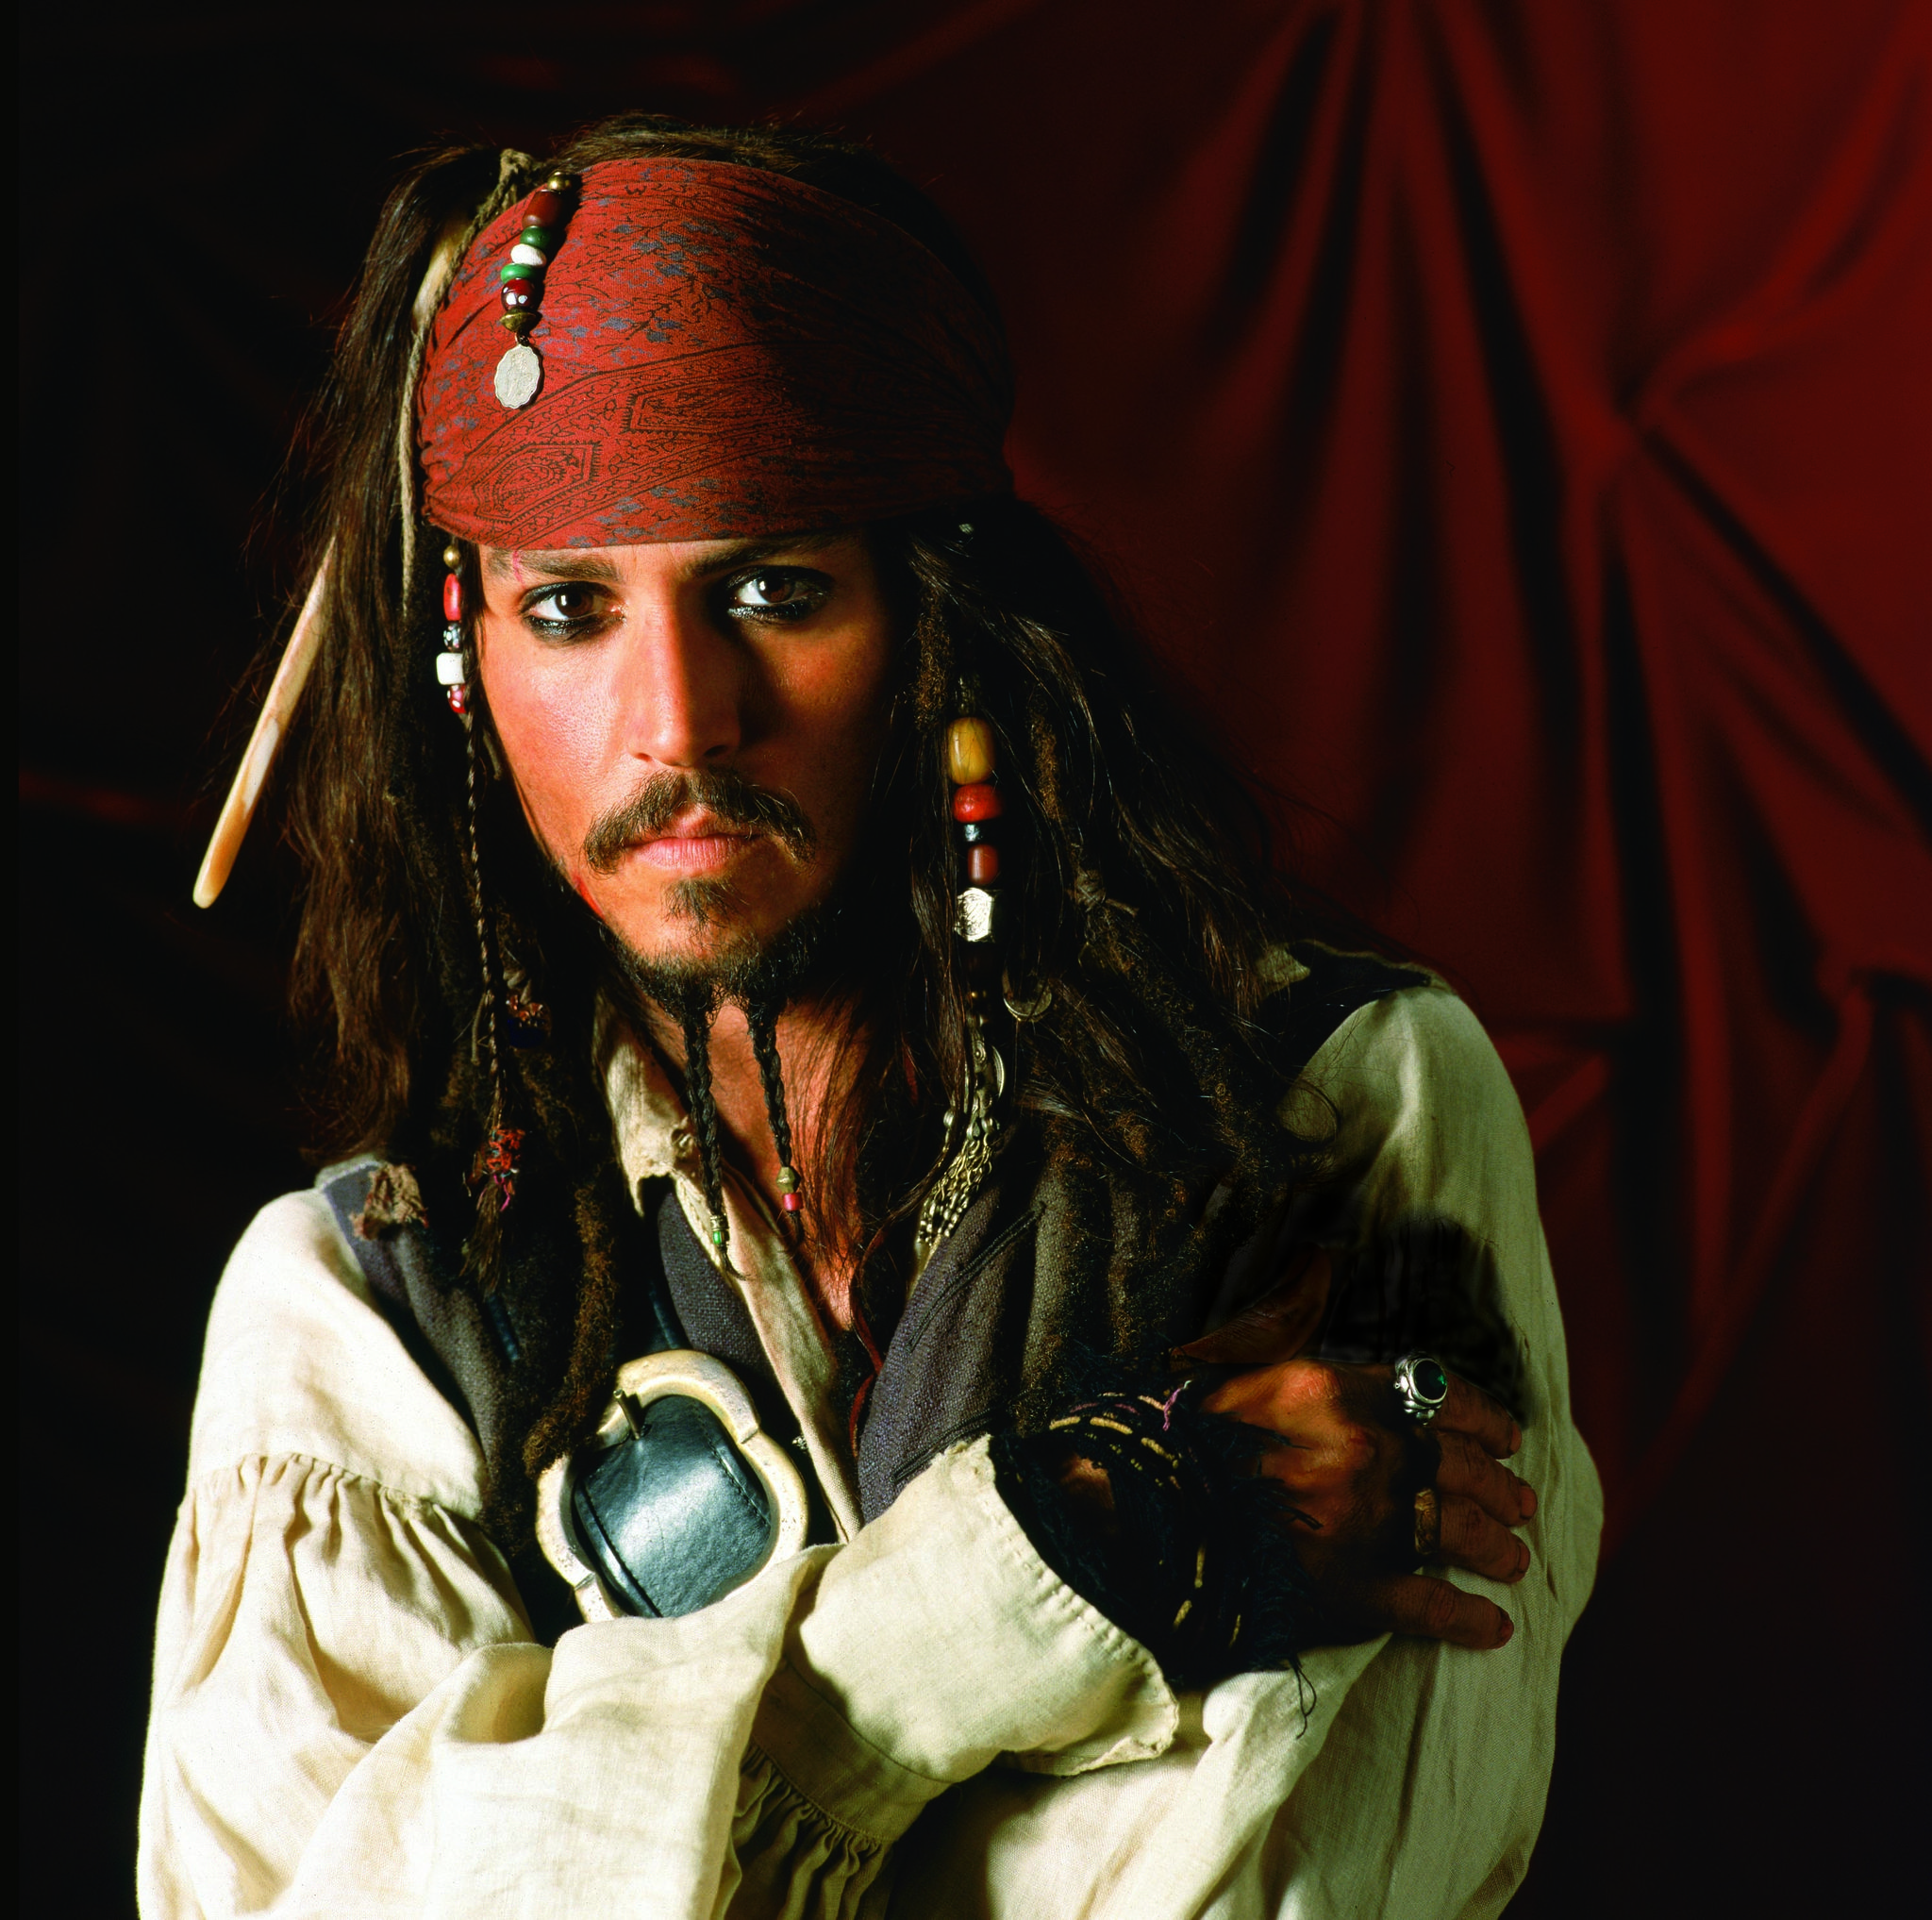 Piratas del Caribe 4” cumple 10 años: la cinta que empezó a hundir a la  saga antes de la debacle de Johnny Depp, pirates of the Caribbean: On  Stranger Tides